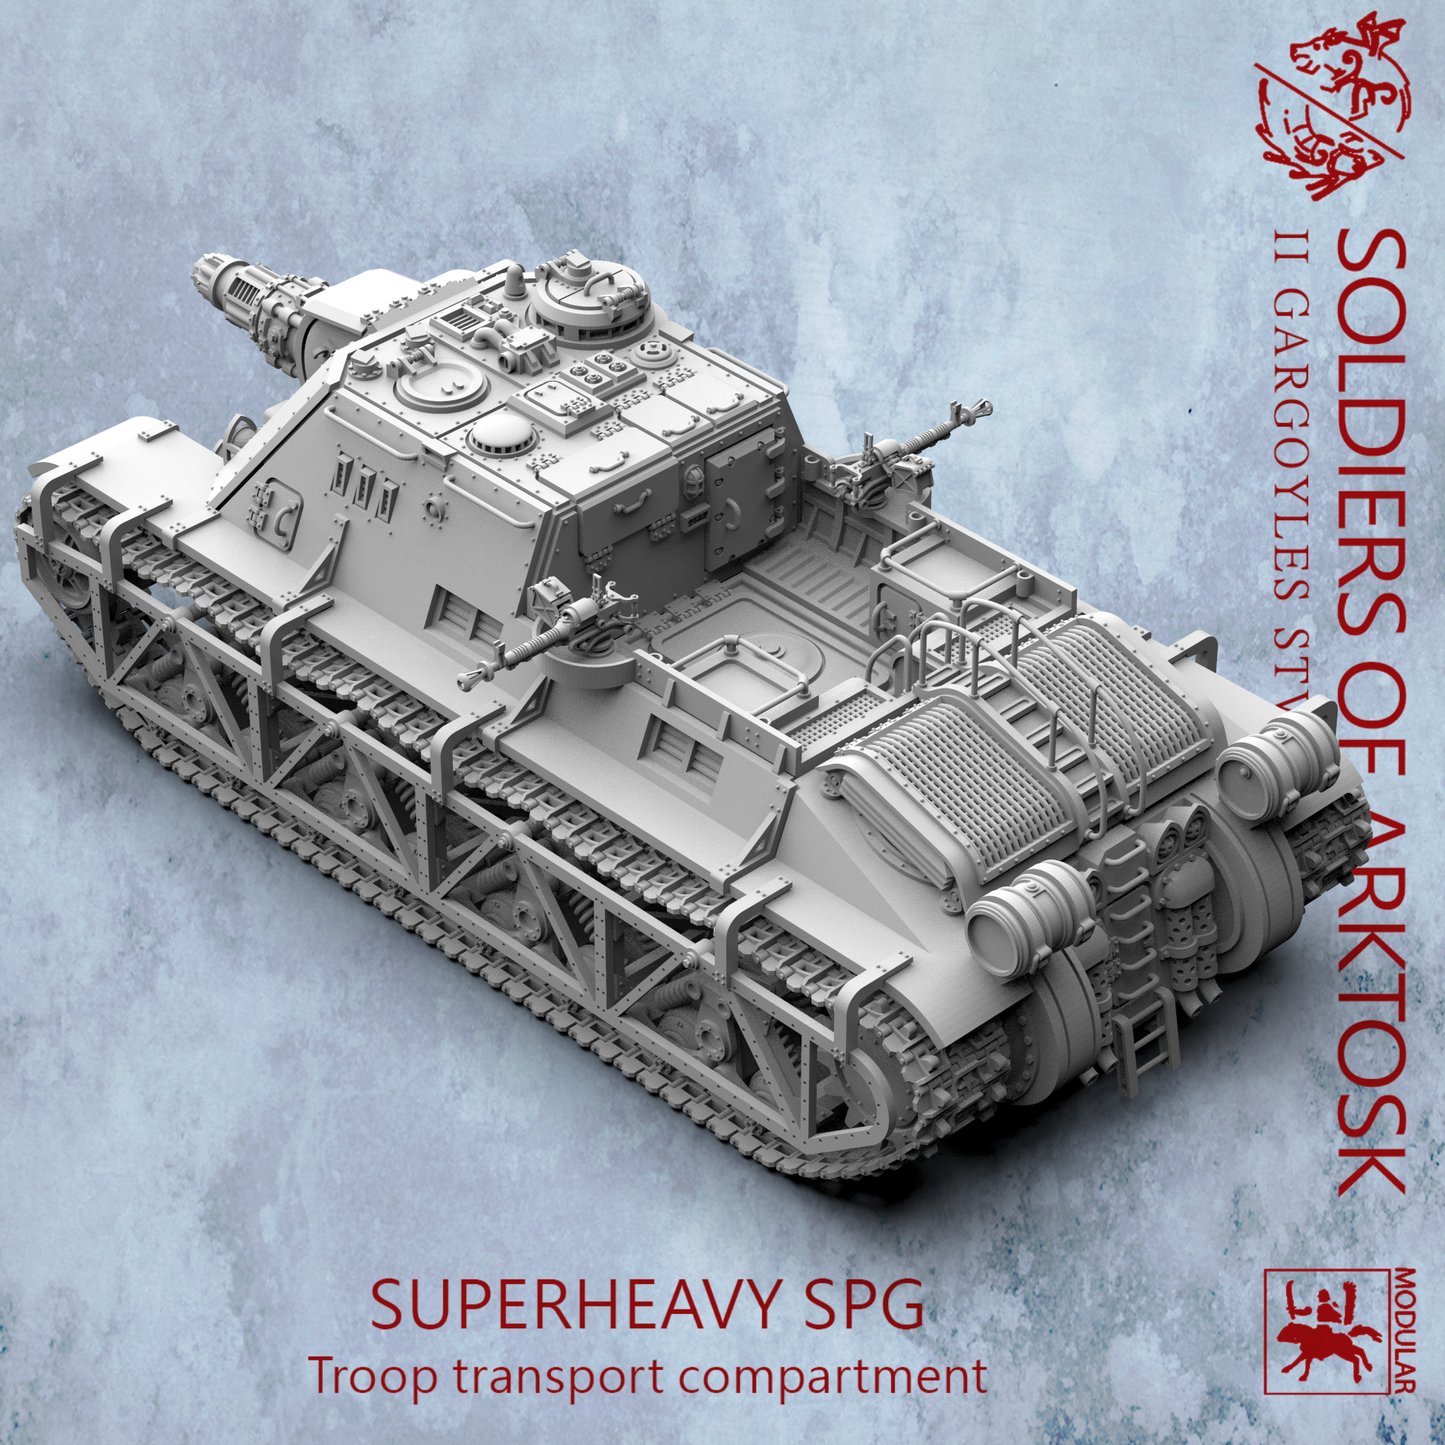 Super Heavy Tank - Soldiers of Arktosk